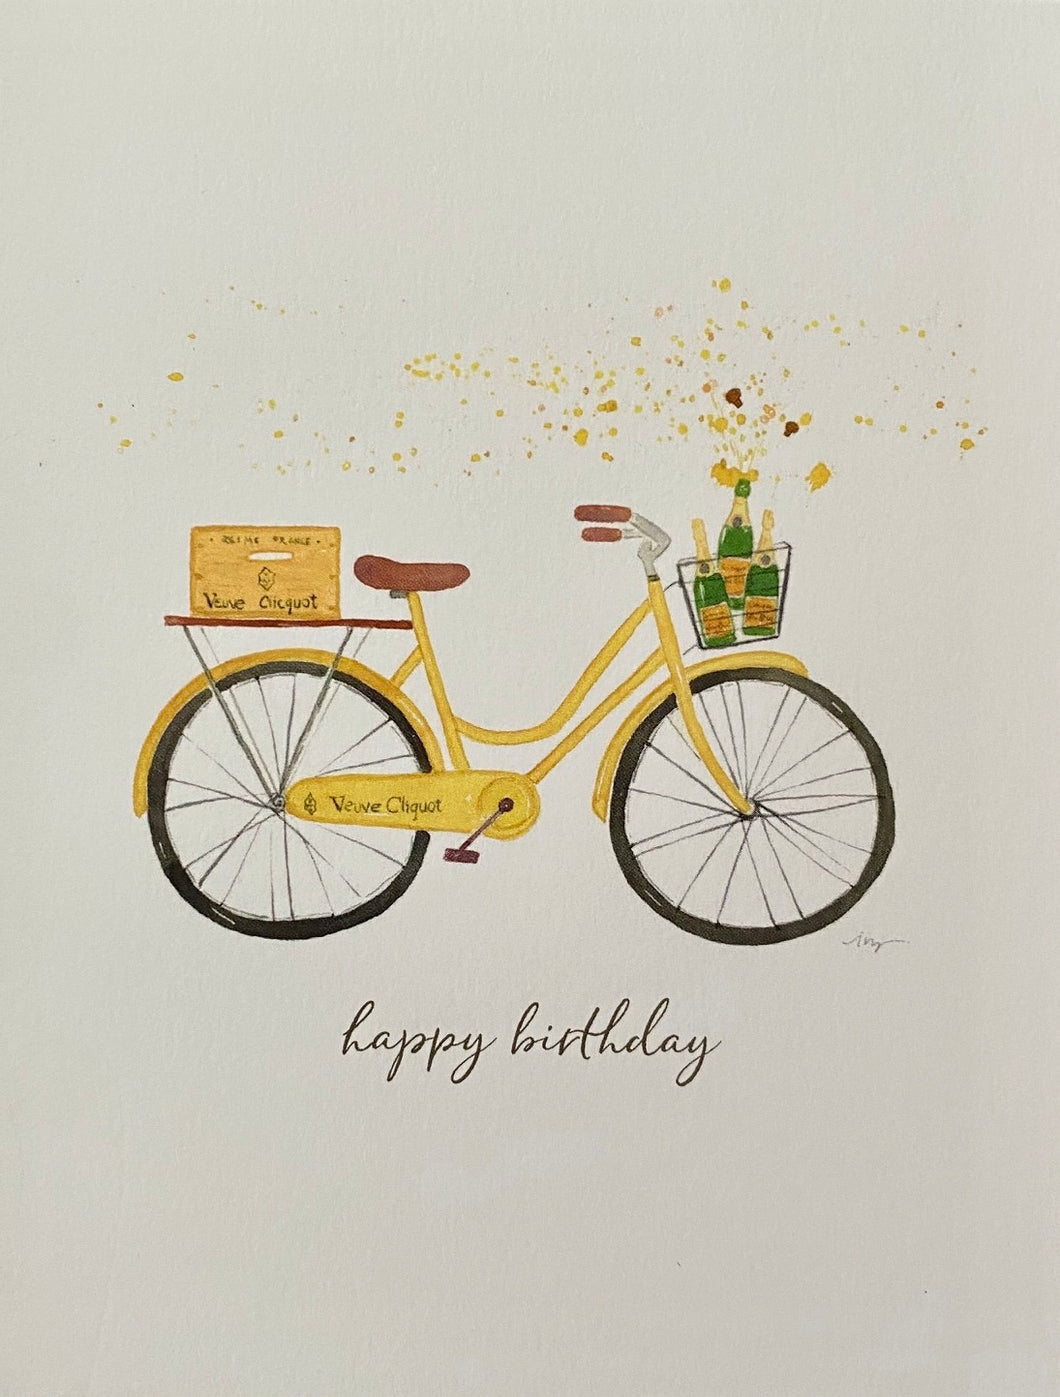 Bicycle No. 5 - Birthday Bubbles